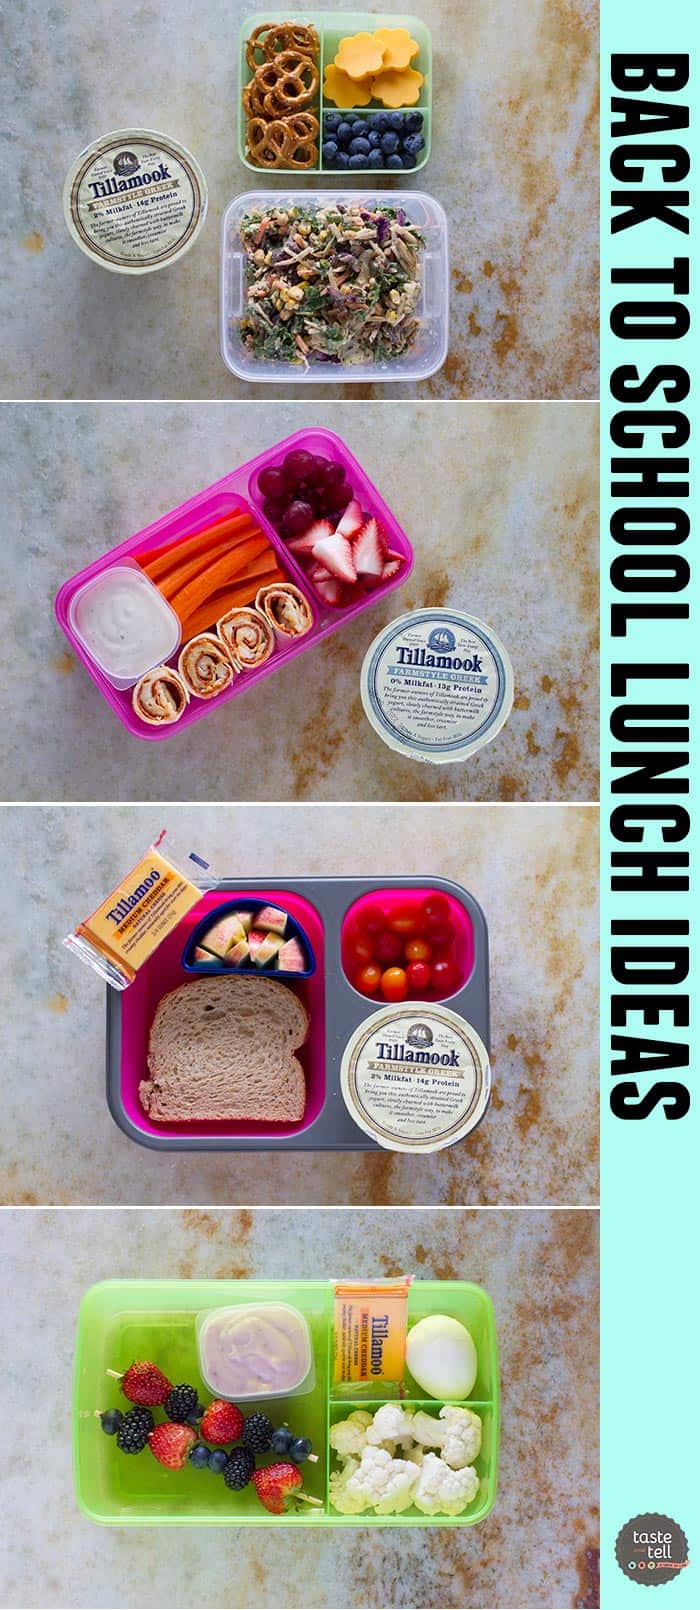 4 great school lunch ideas - great ways to de-junk the lunchbox!